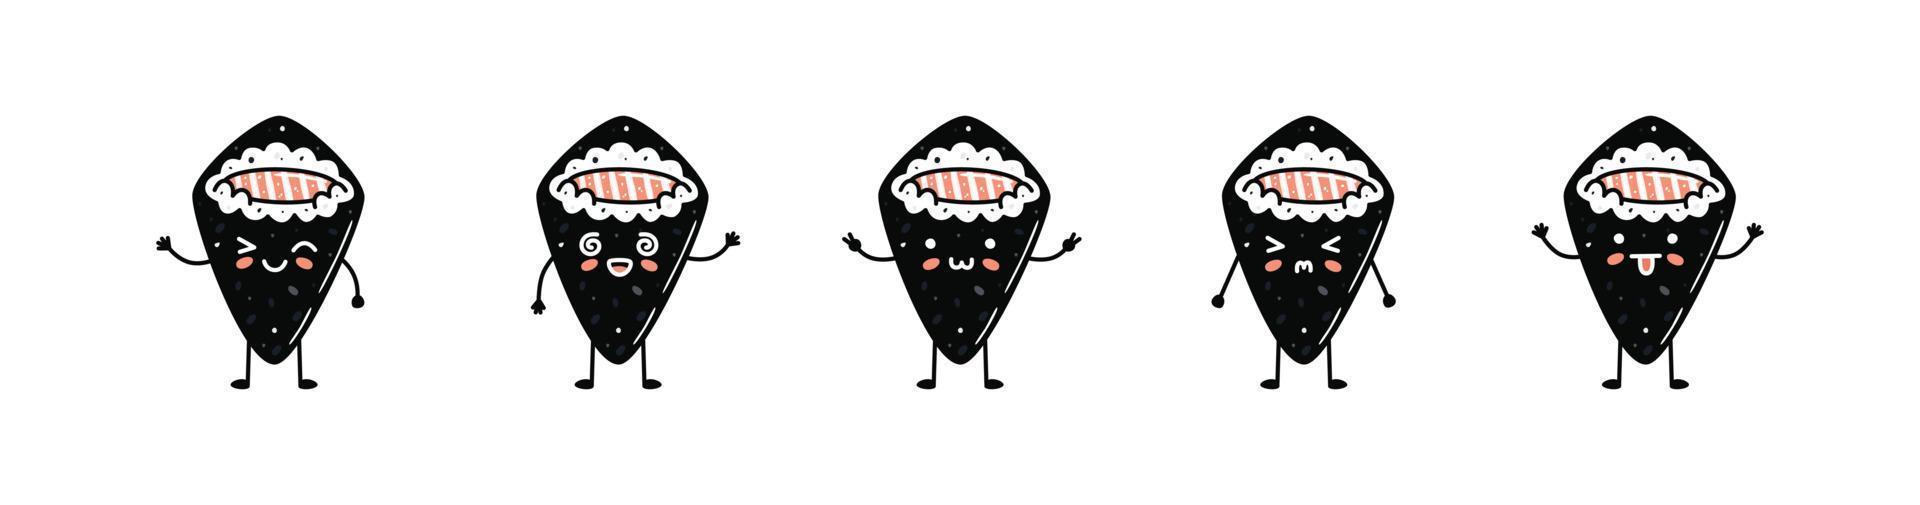 reeks van kawaii temaki sushi mascottes in tekenfilm stijl vector